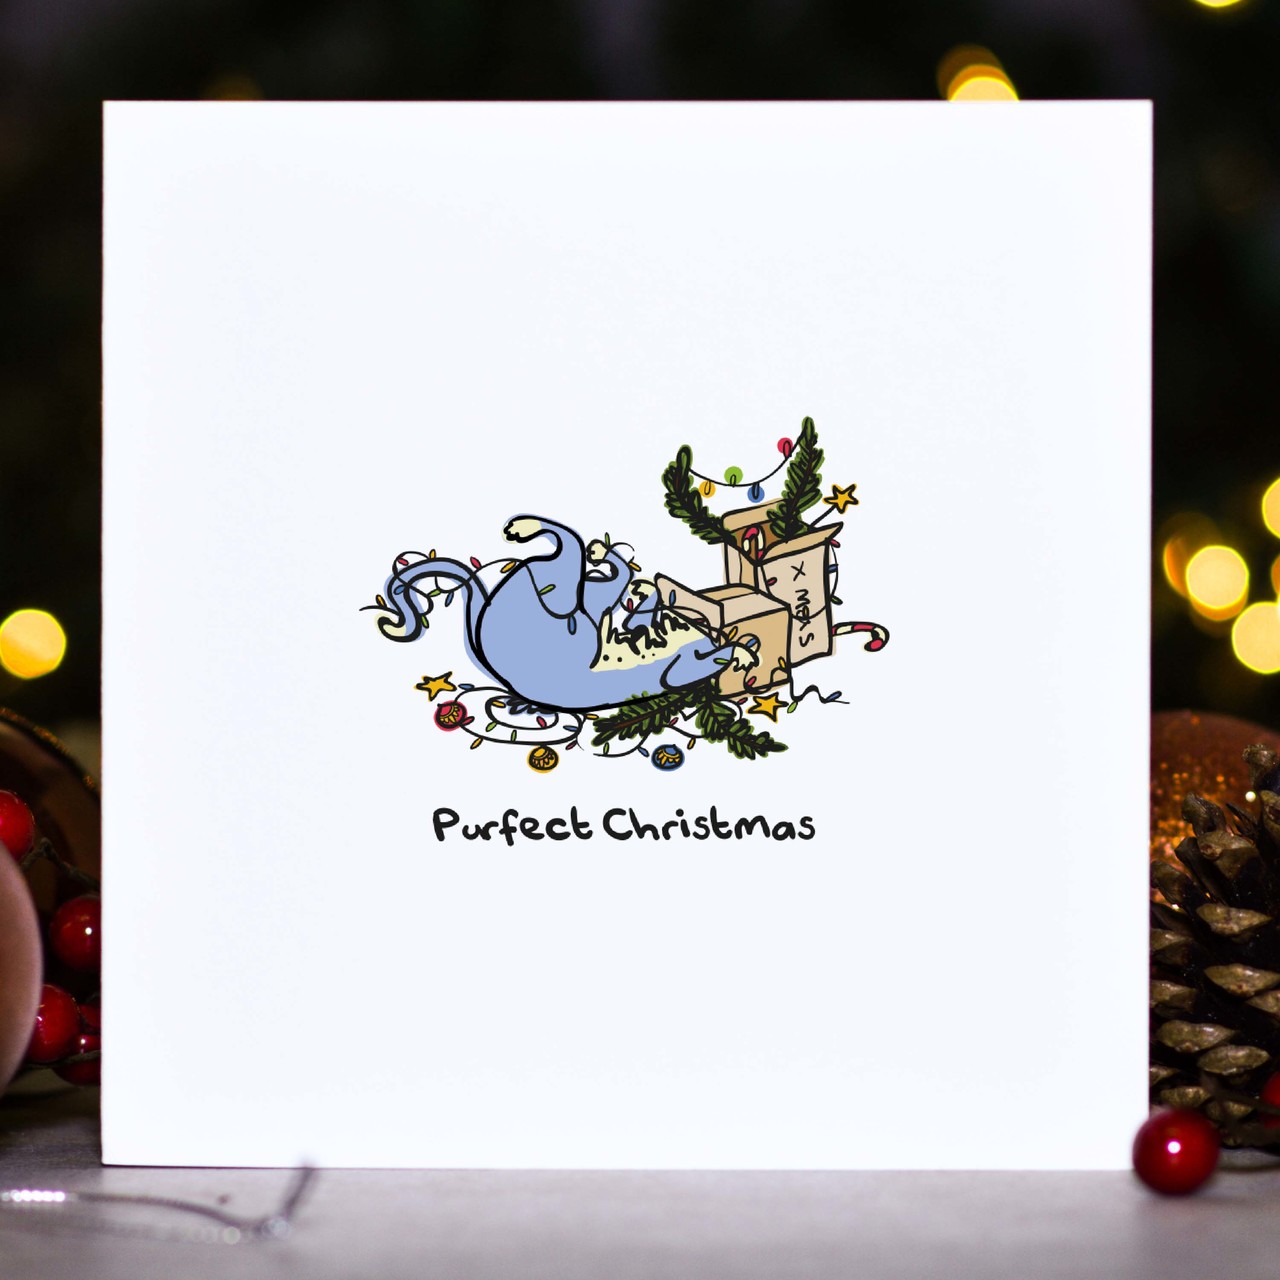 Purfect Christmas Card